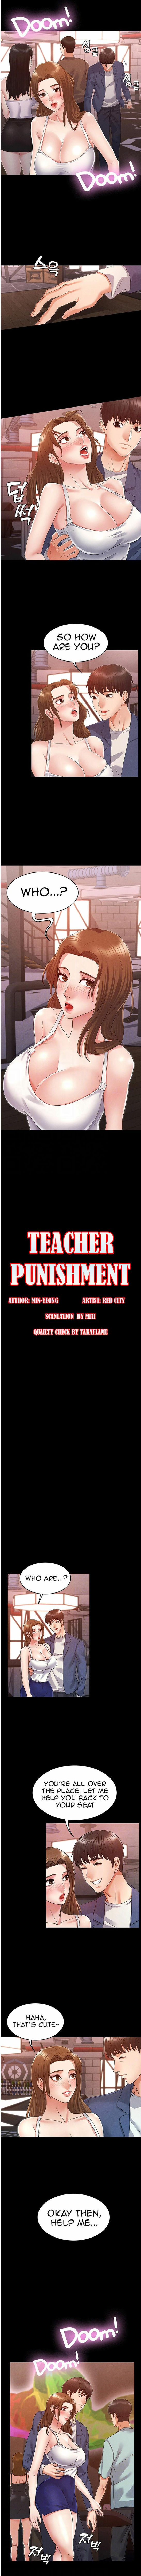 TEACHER PUNISHMENT Ch.1-18 11